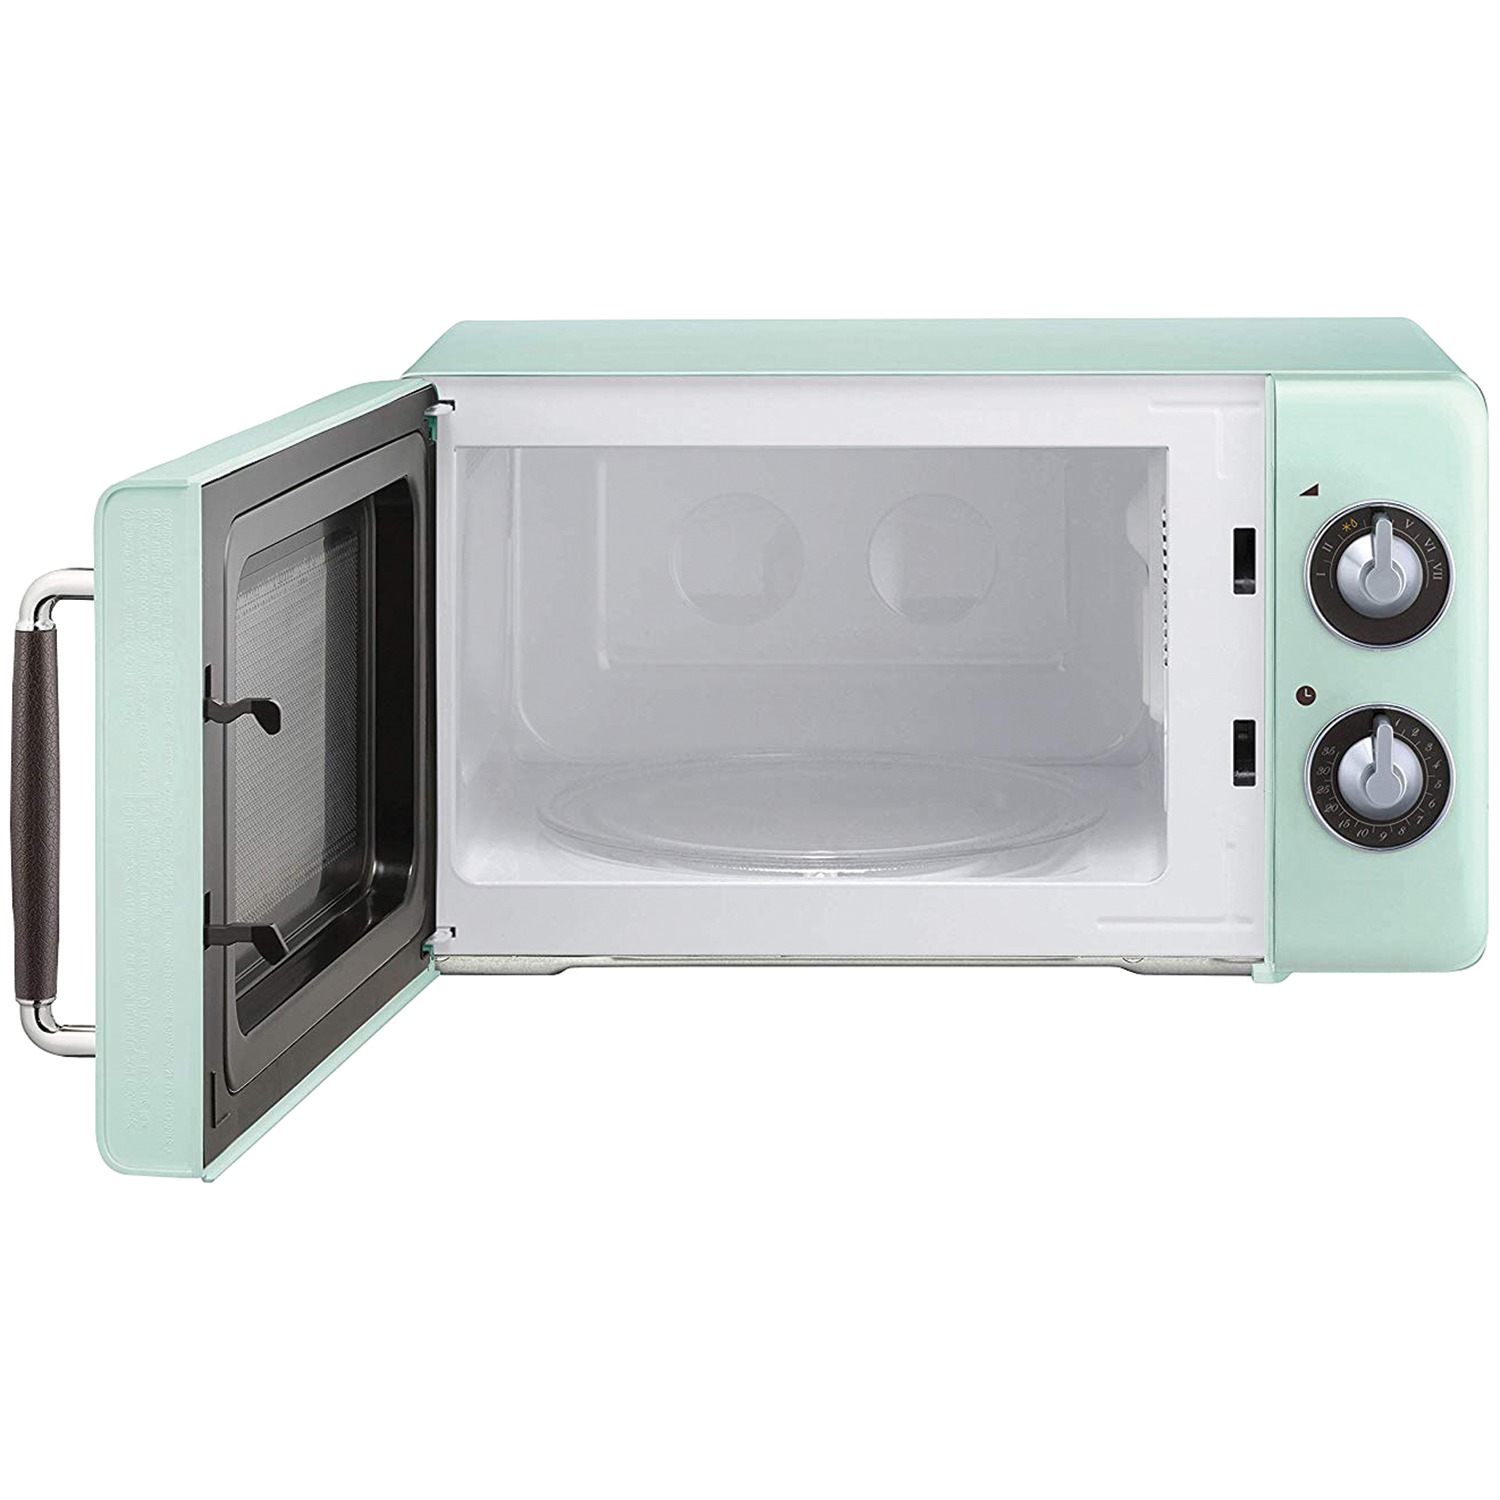 0.7 Cu ft New Magic Chef 700 Watt Countertop Microwave in Mint Green - image 5 of 5